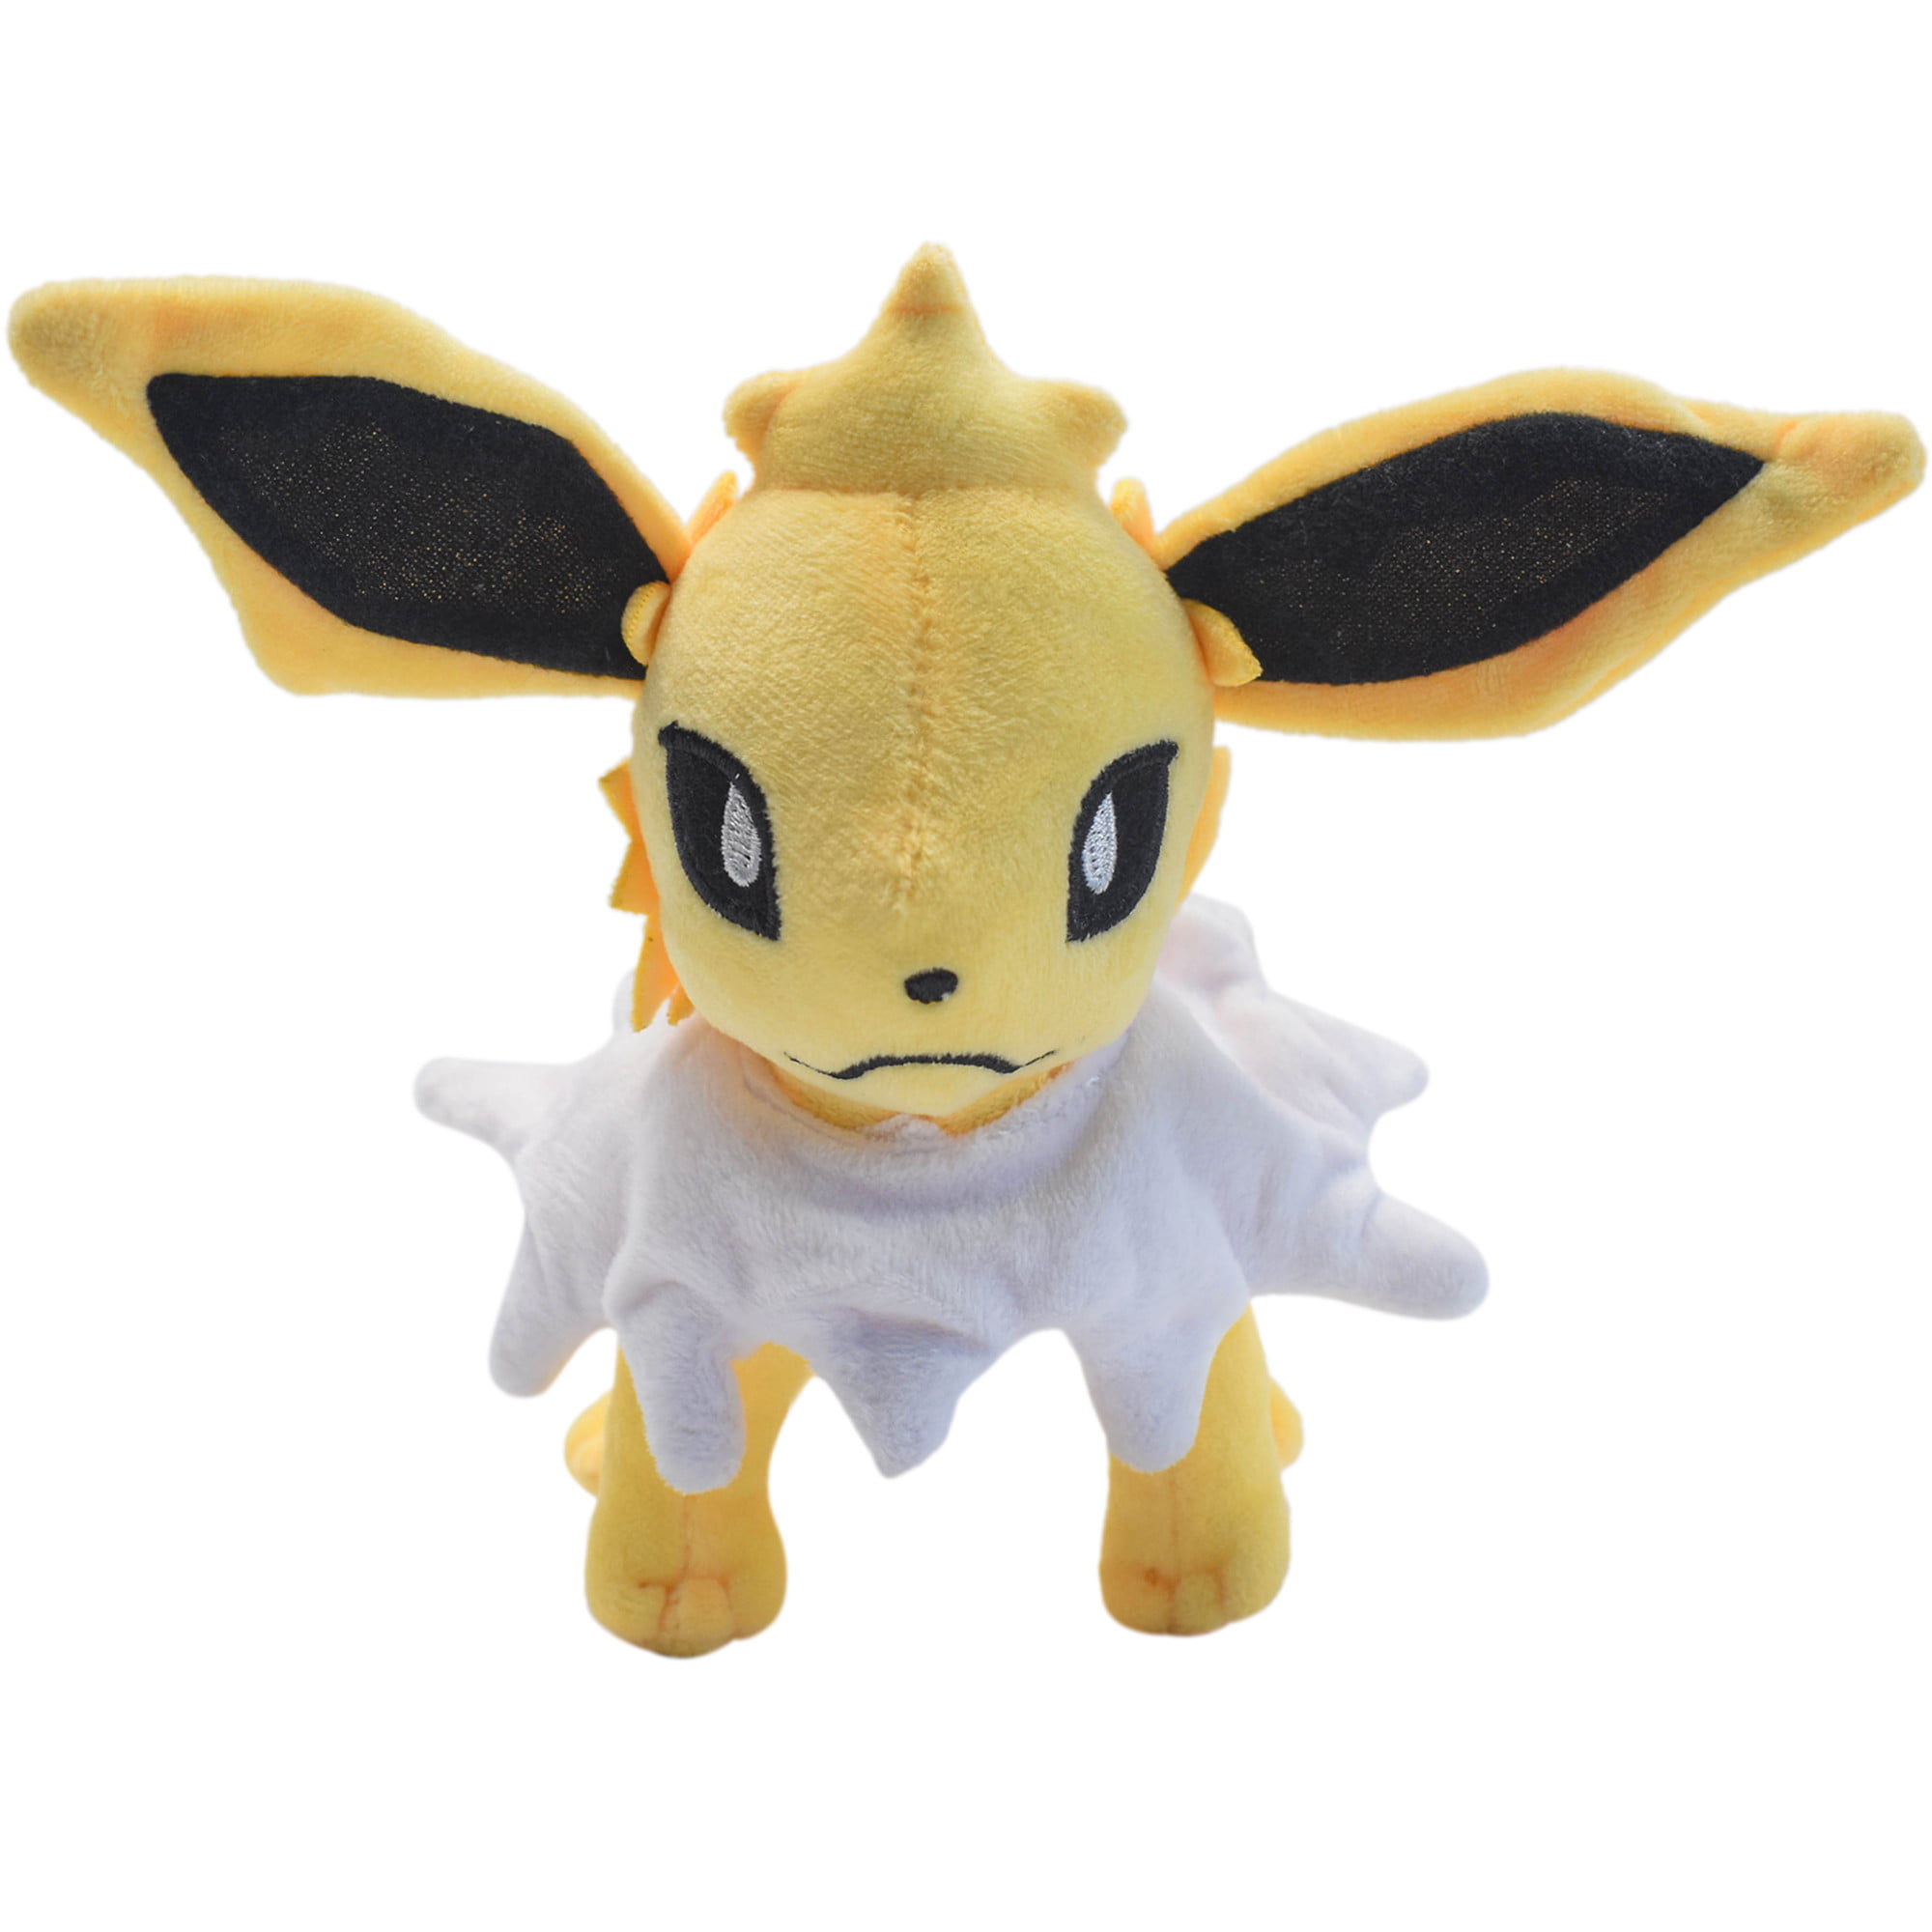 Espeon Pokemon Pokedoll Plush Toy Doll Stuffed Animal Soft Sun from Eevee New 7" 